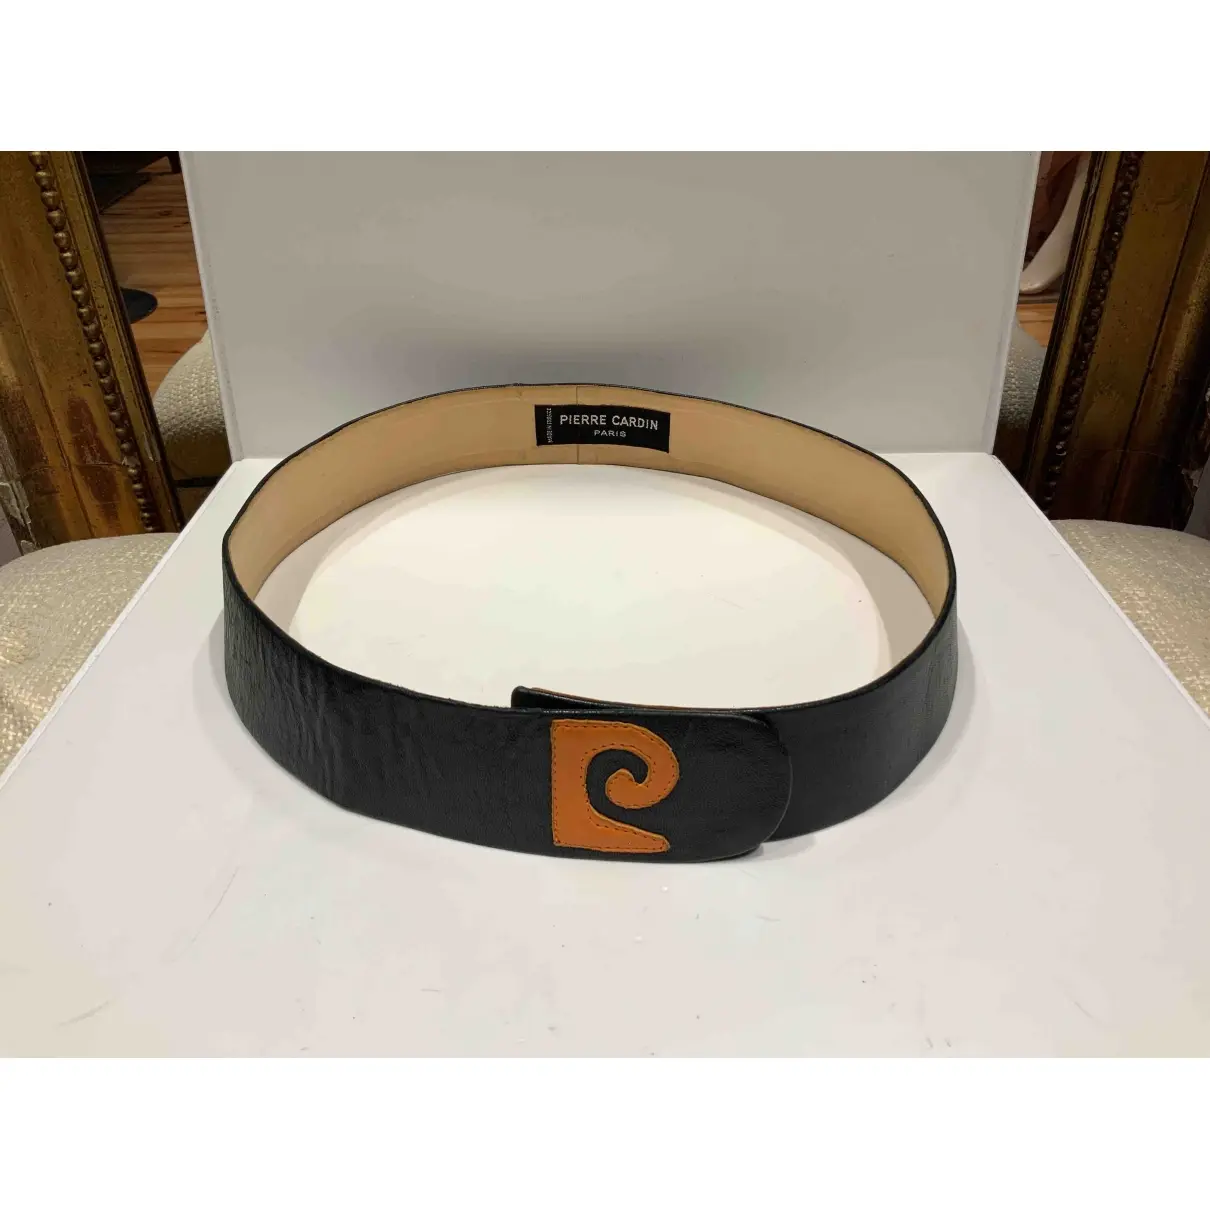 Buy Pierre Cardin Leather belt online - Vintage